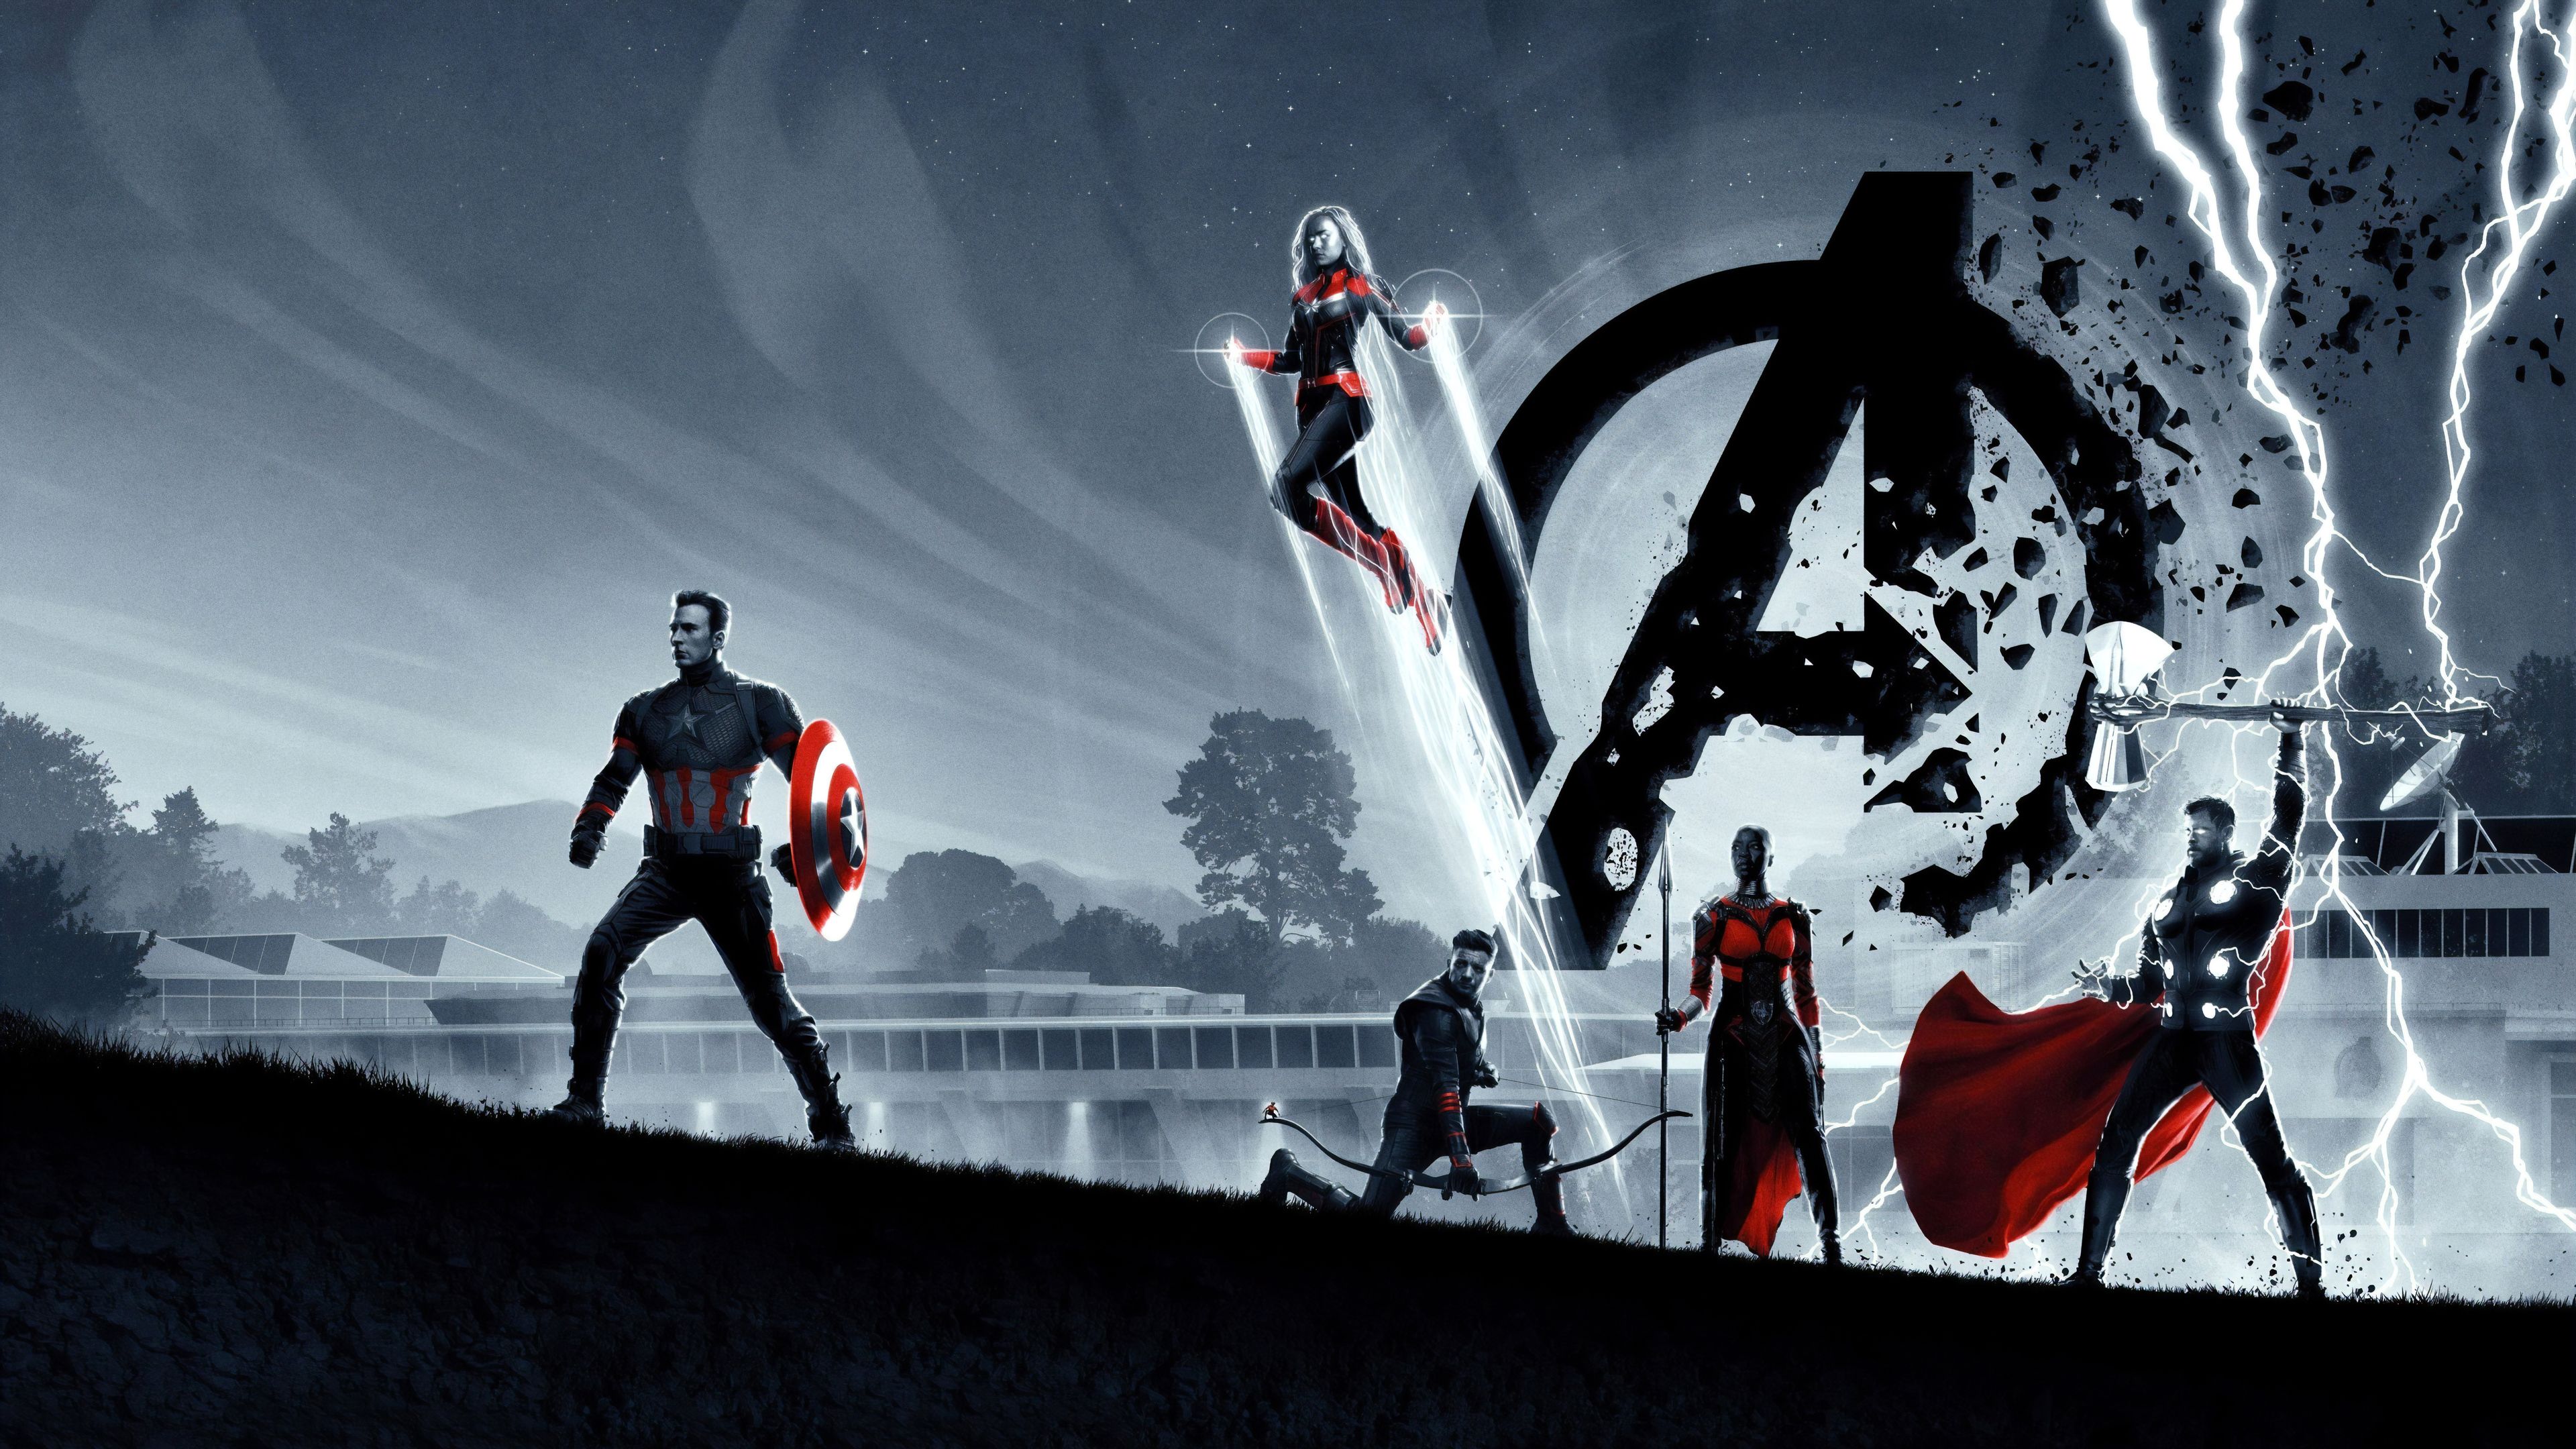 Avengers Endgame 4k 2019 movies wallpapers, hd